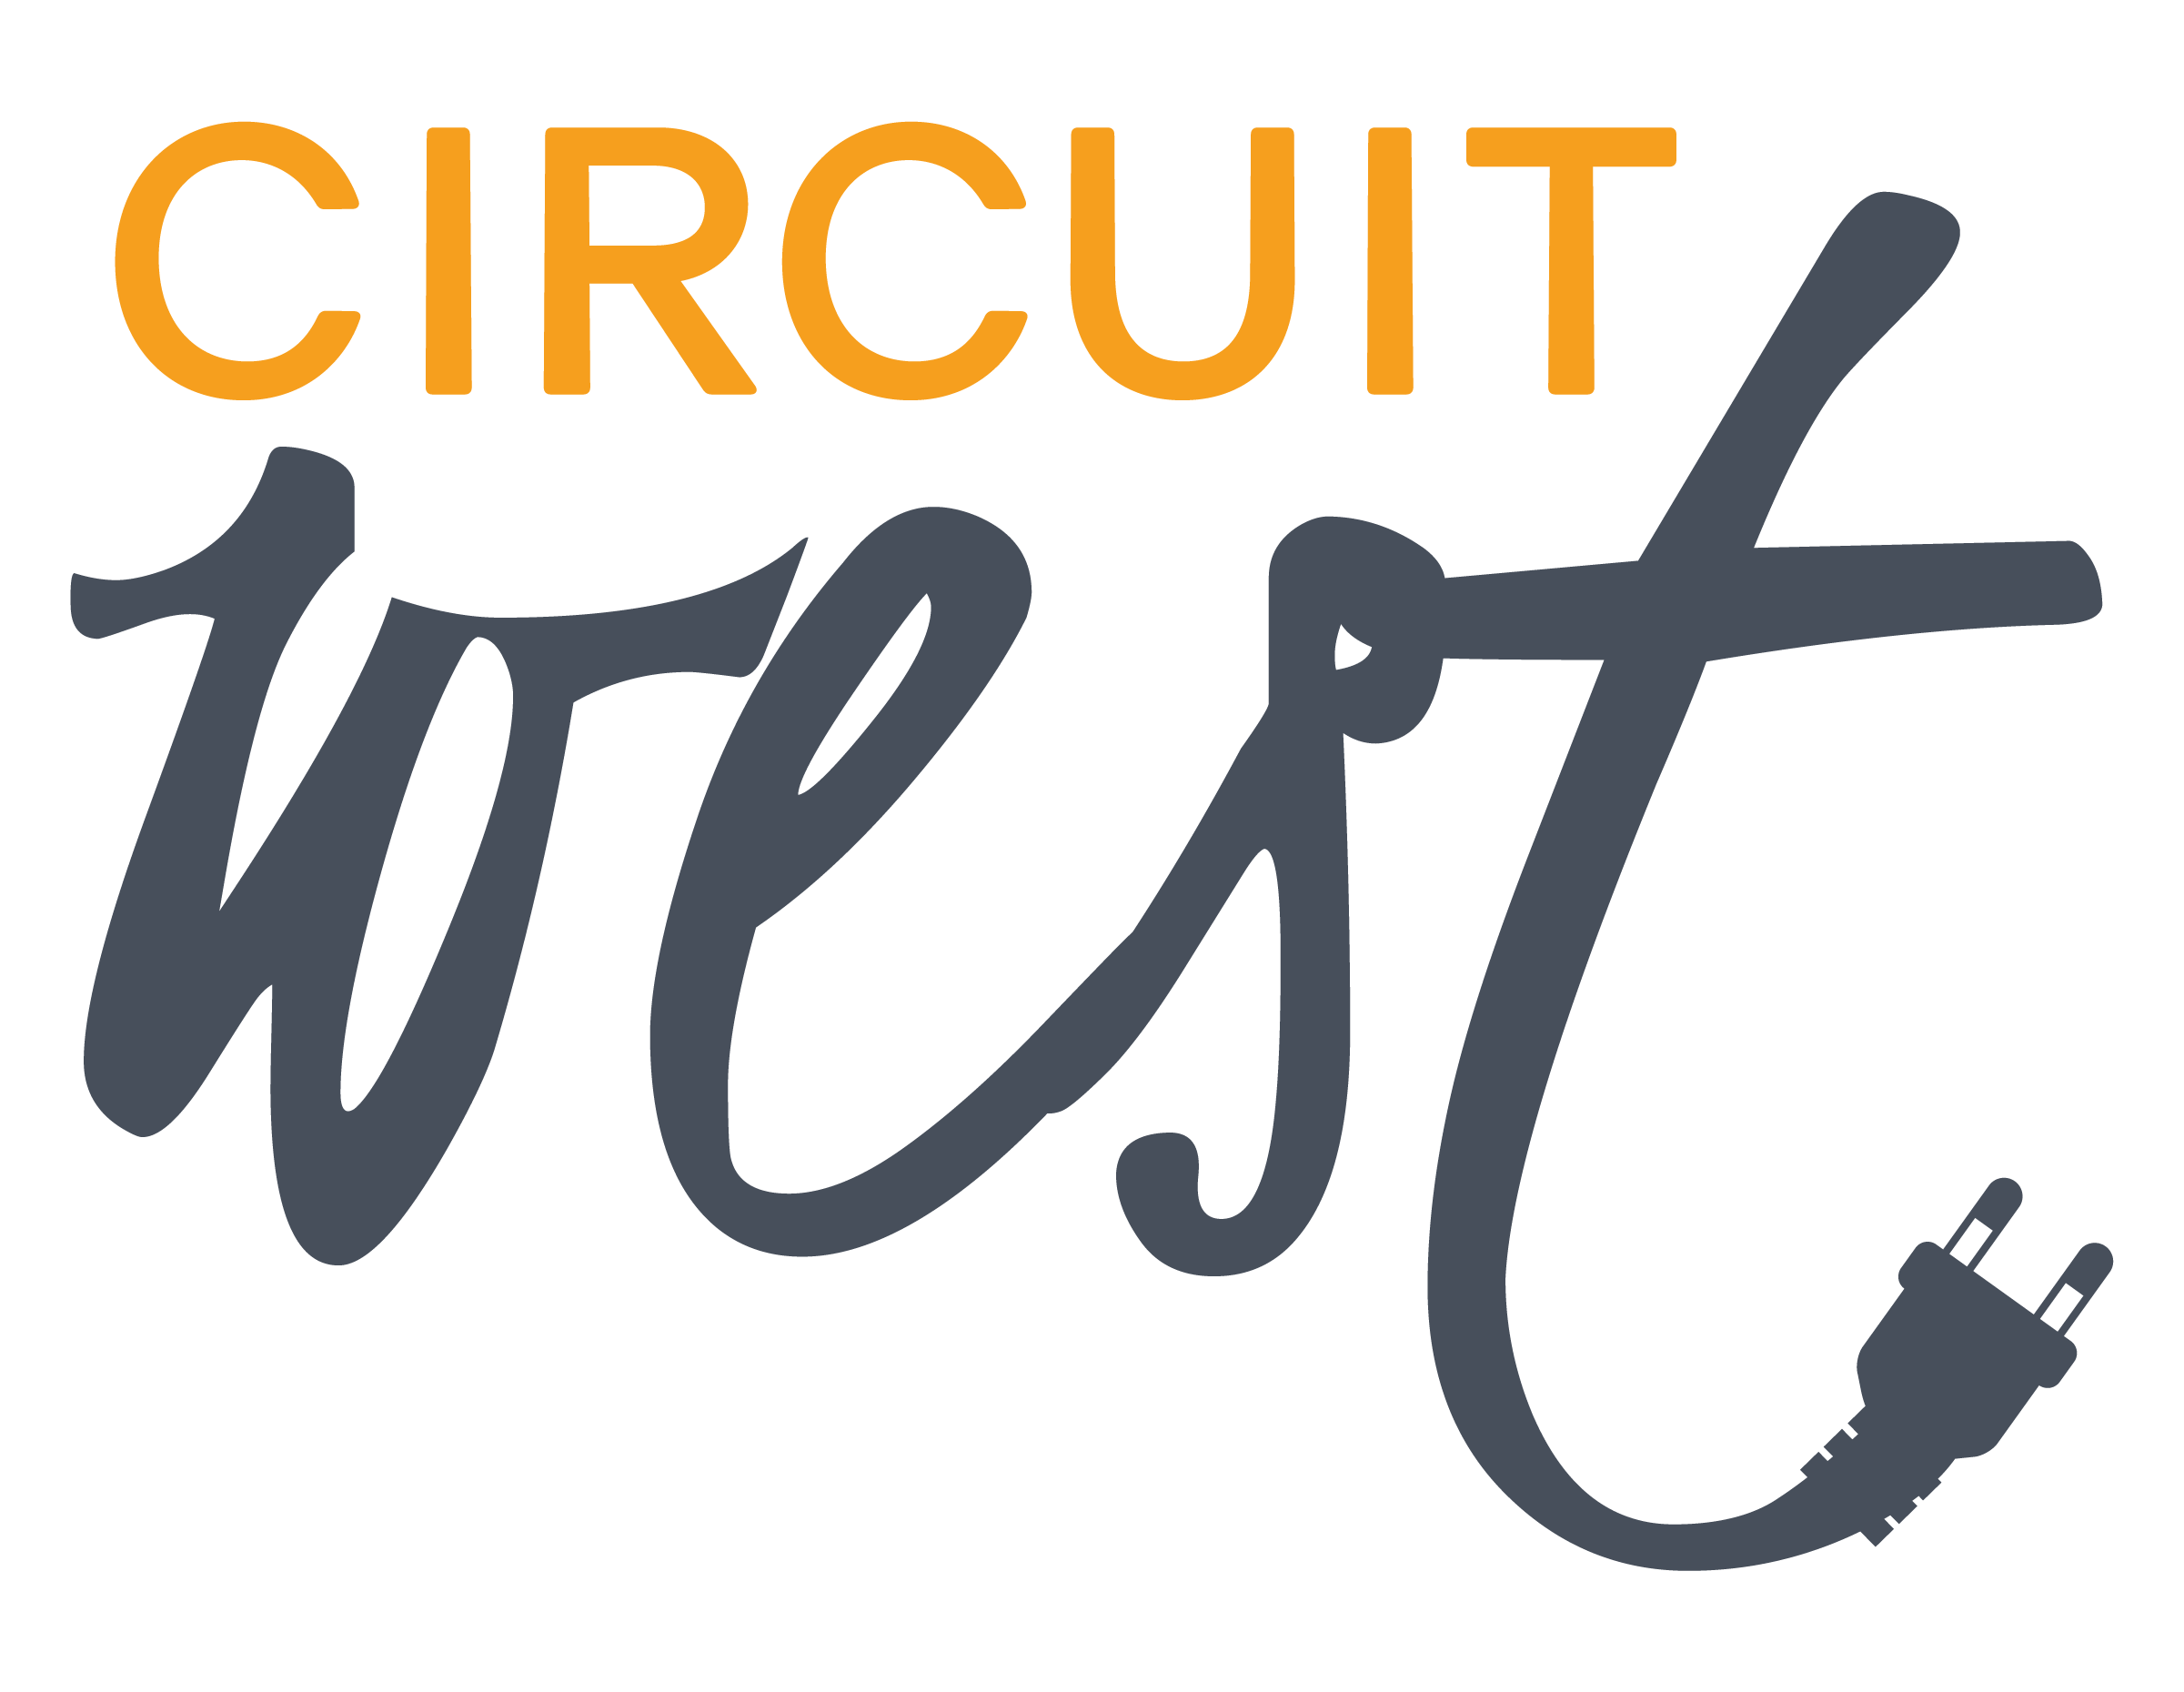 Circuit West